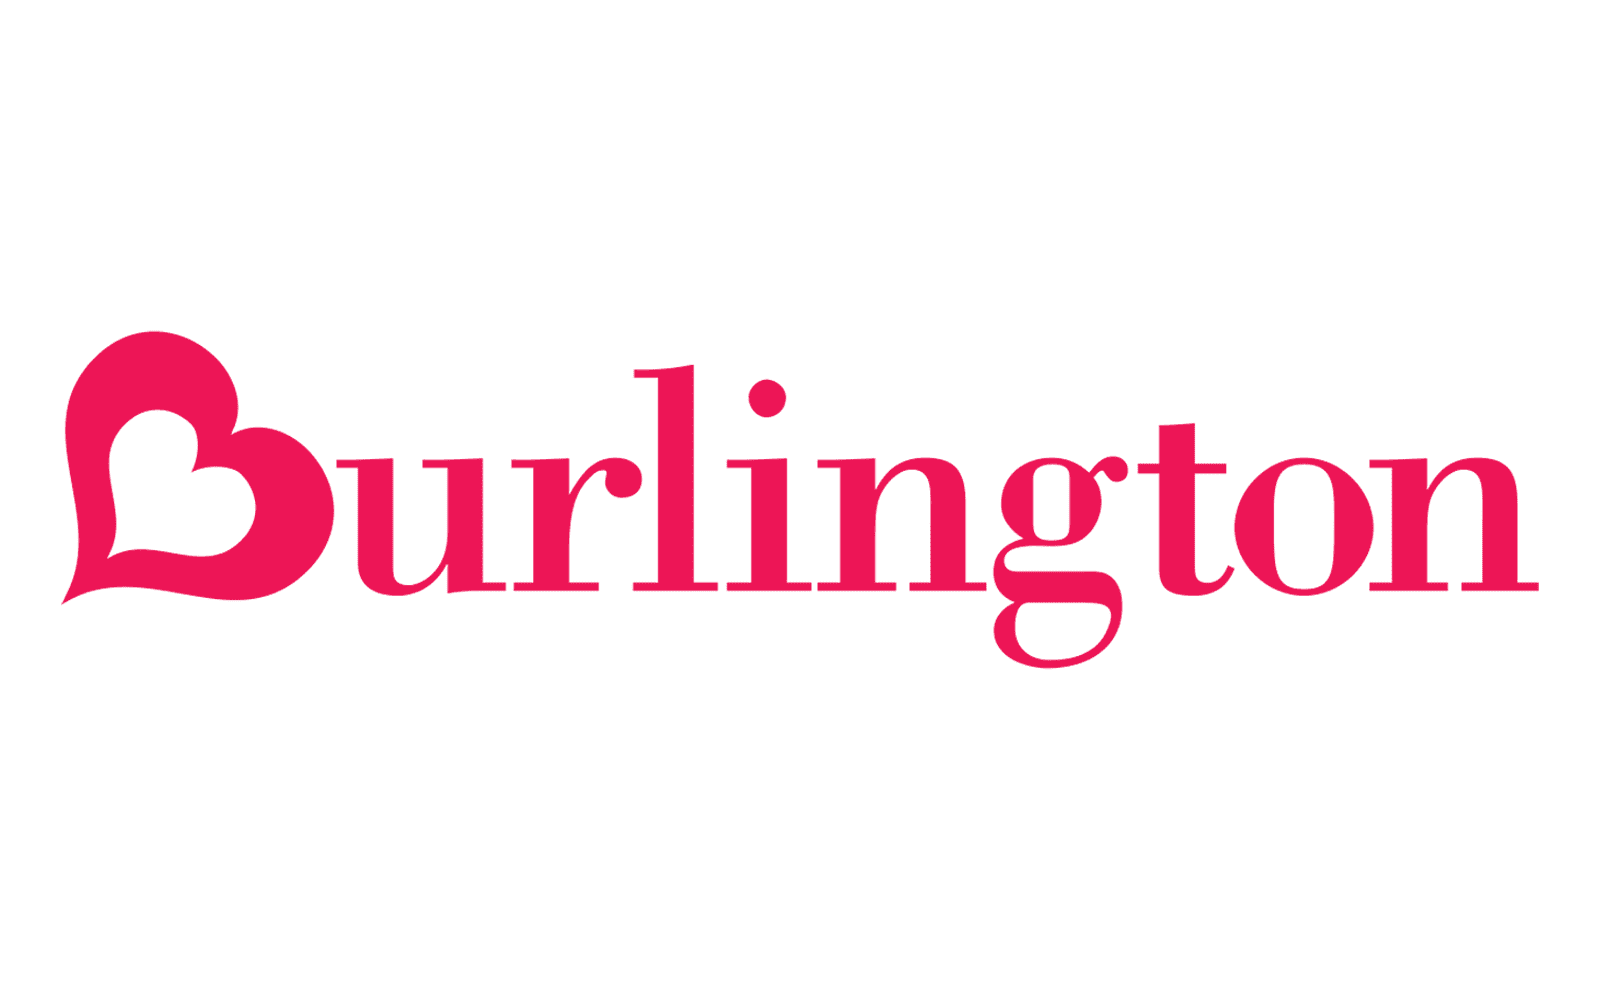 Burlington Stores To Surge Over 21%? Plus Wedbush Slashes PT On Jack In The Box